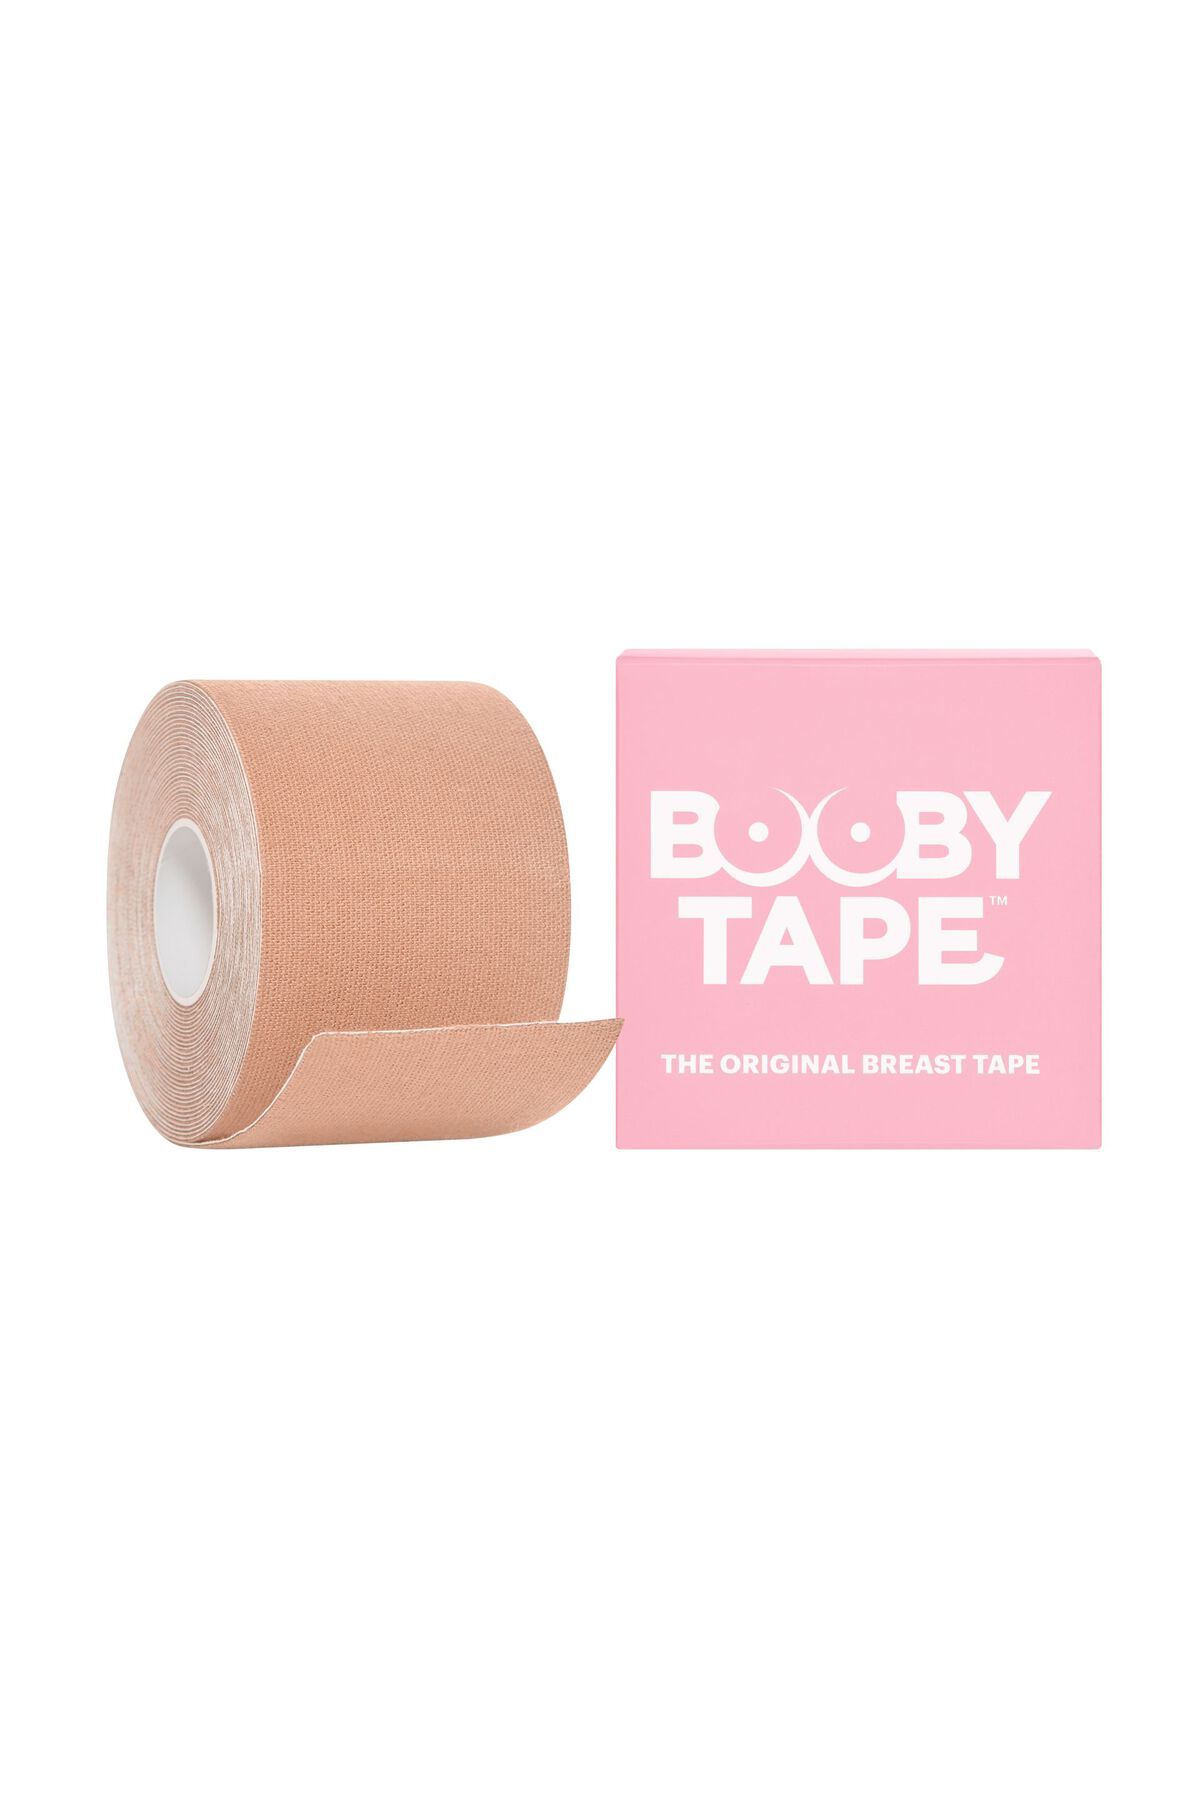 Boob Tape in 2 Colors